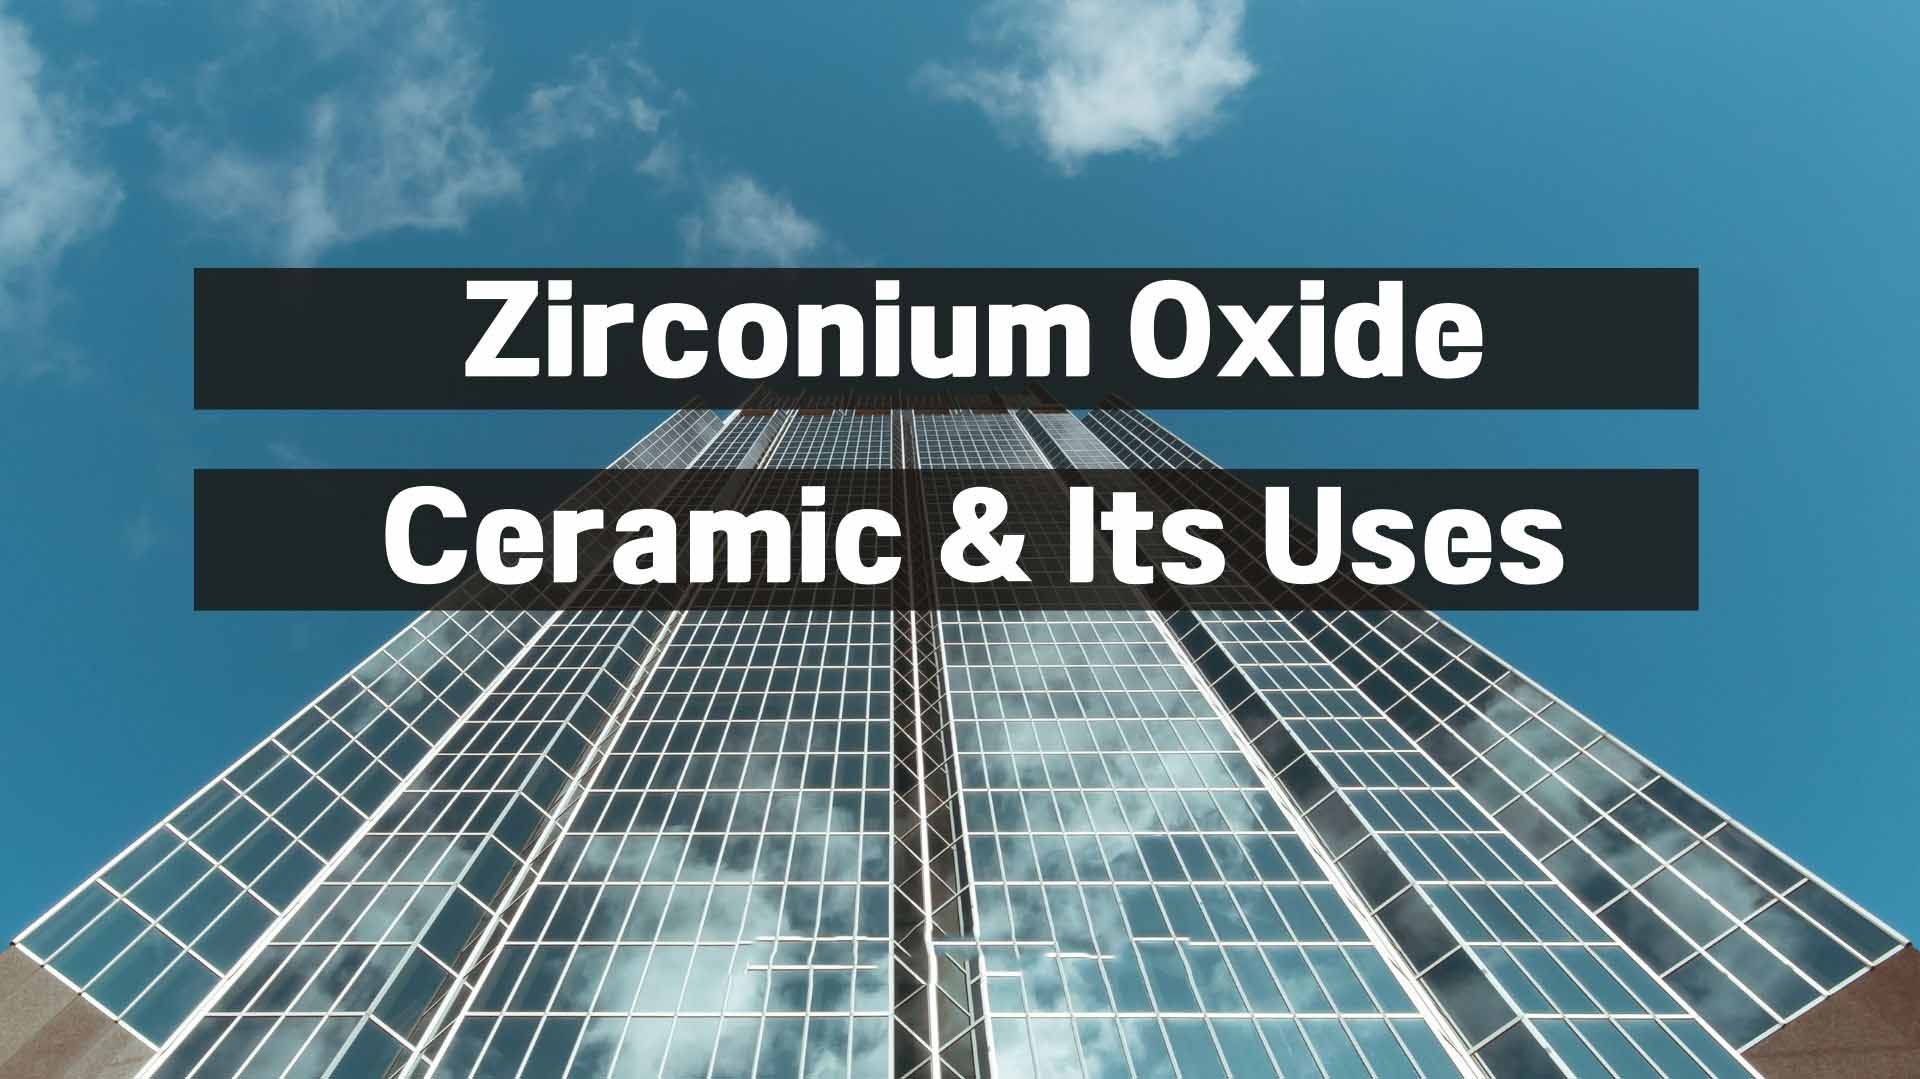 Zirconium Oxide Ceramic & Its Uses